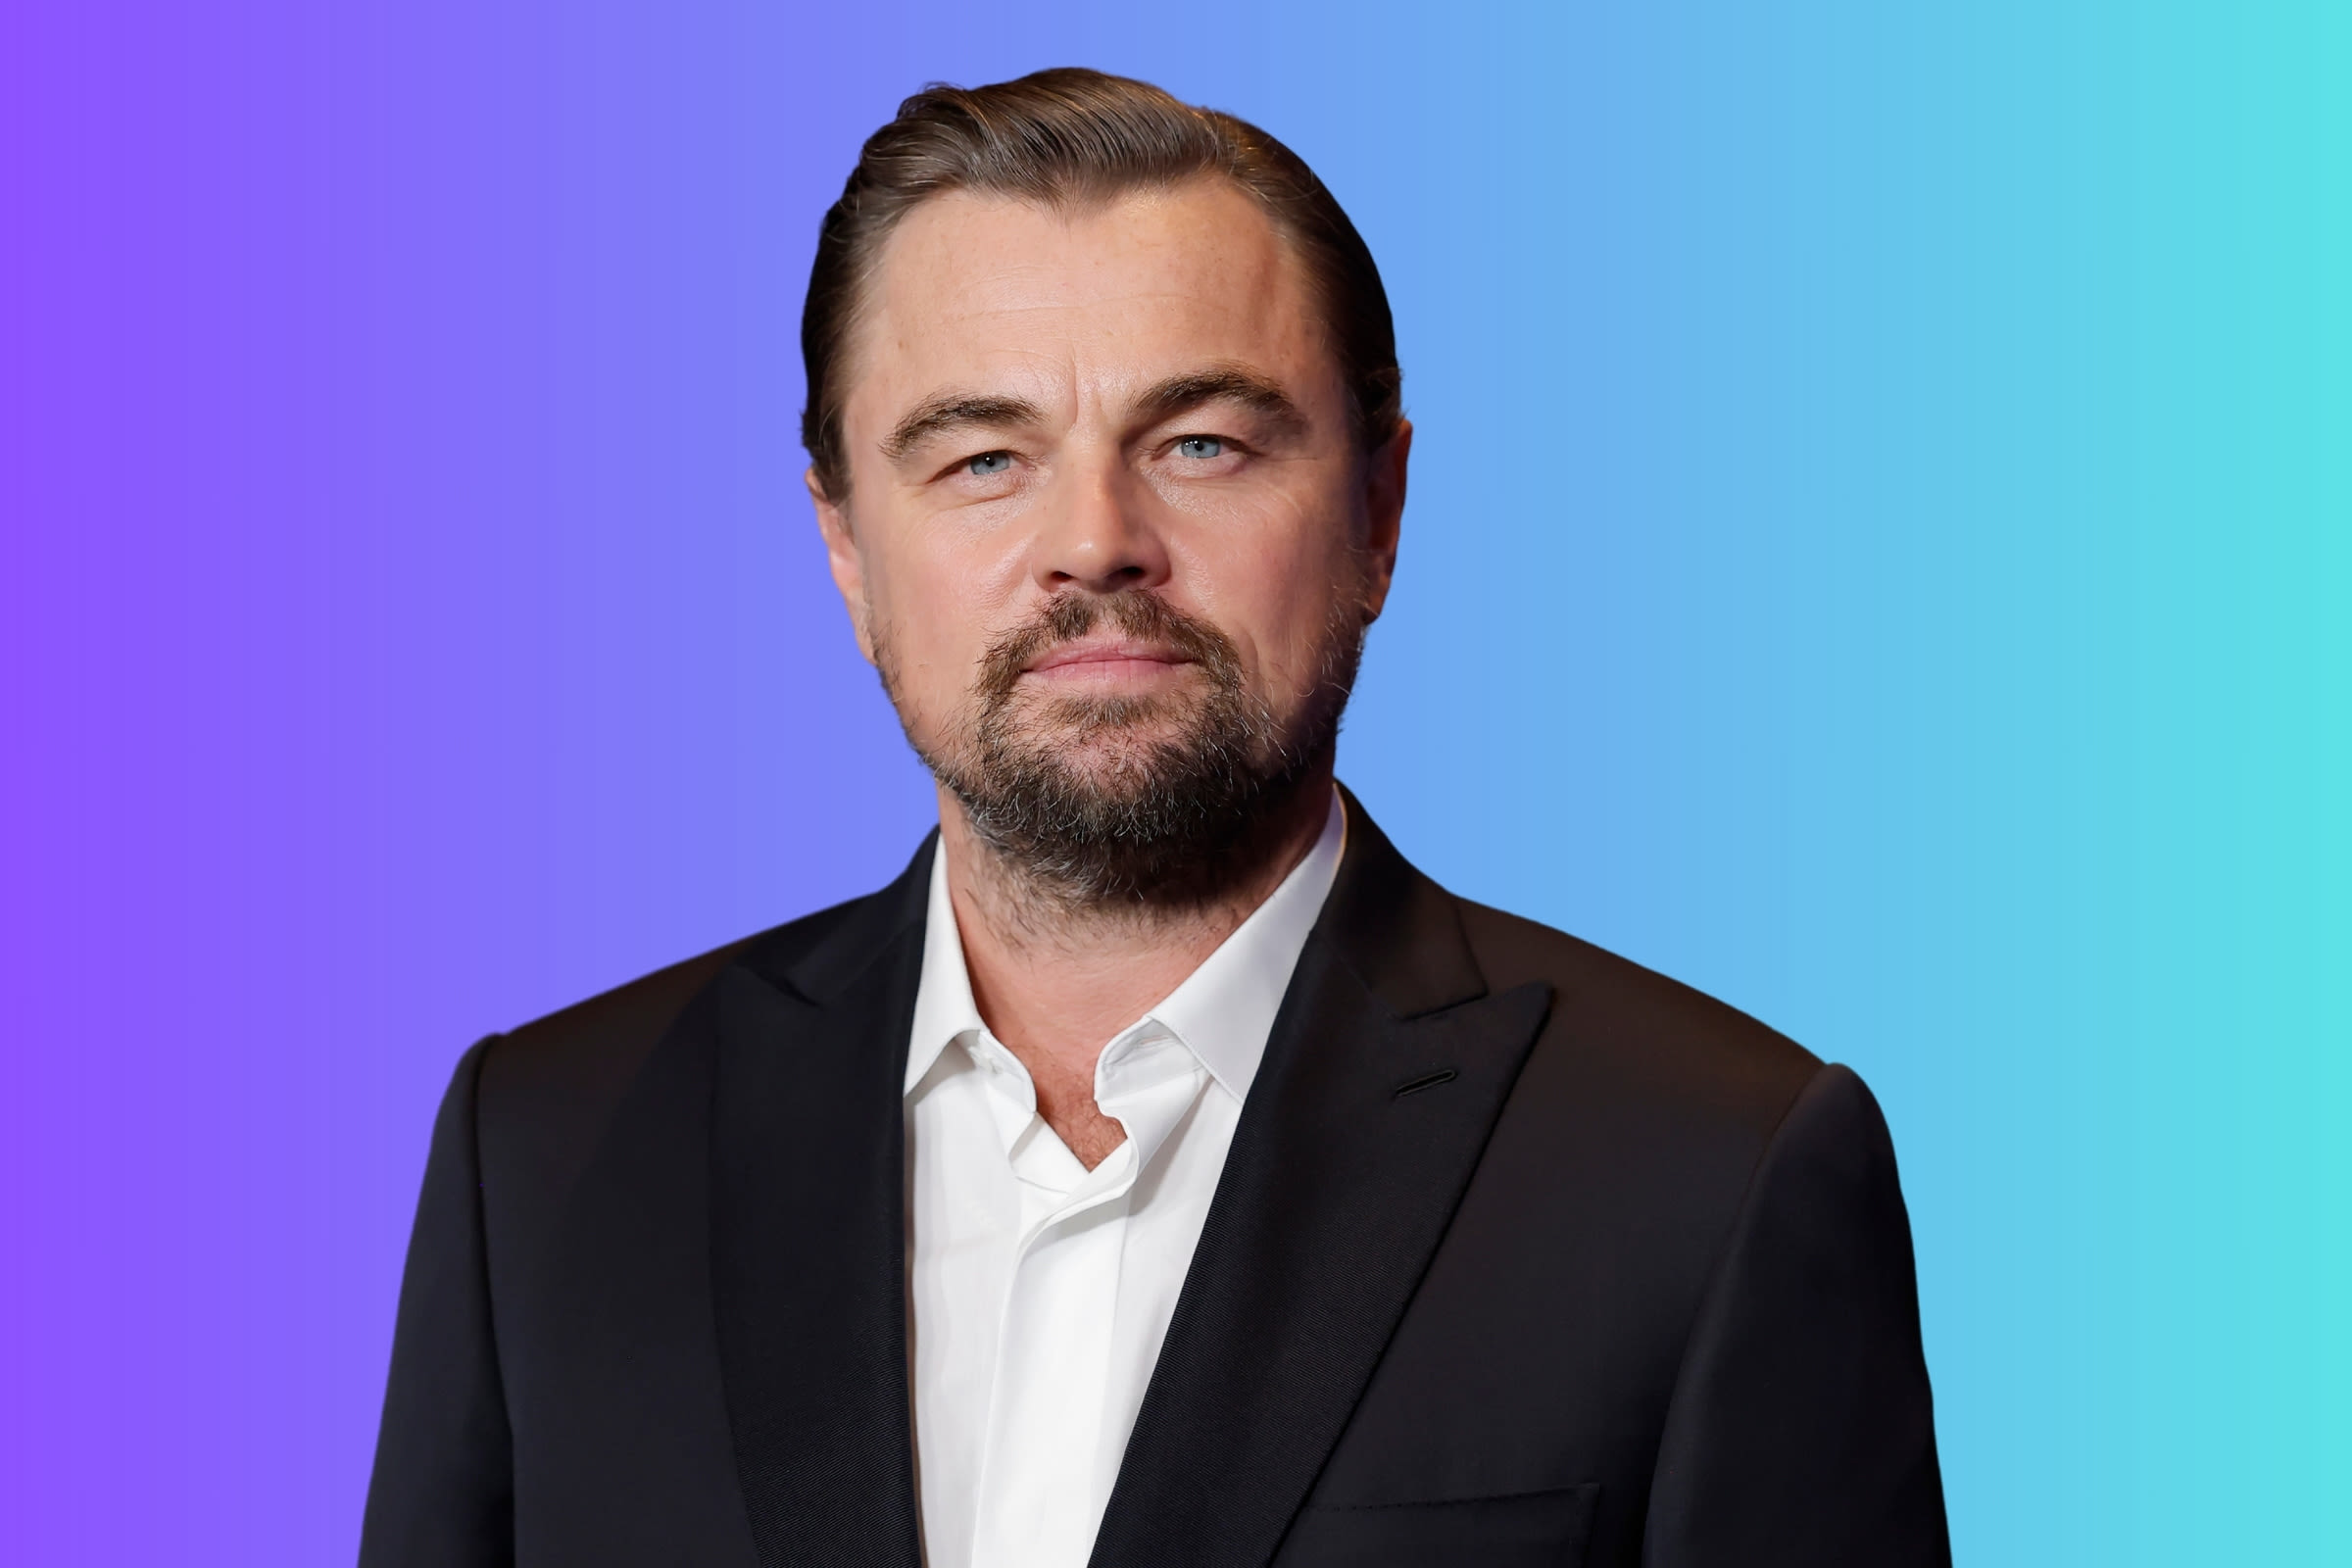 Leonardo DiCaprio childhood photo takes off online